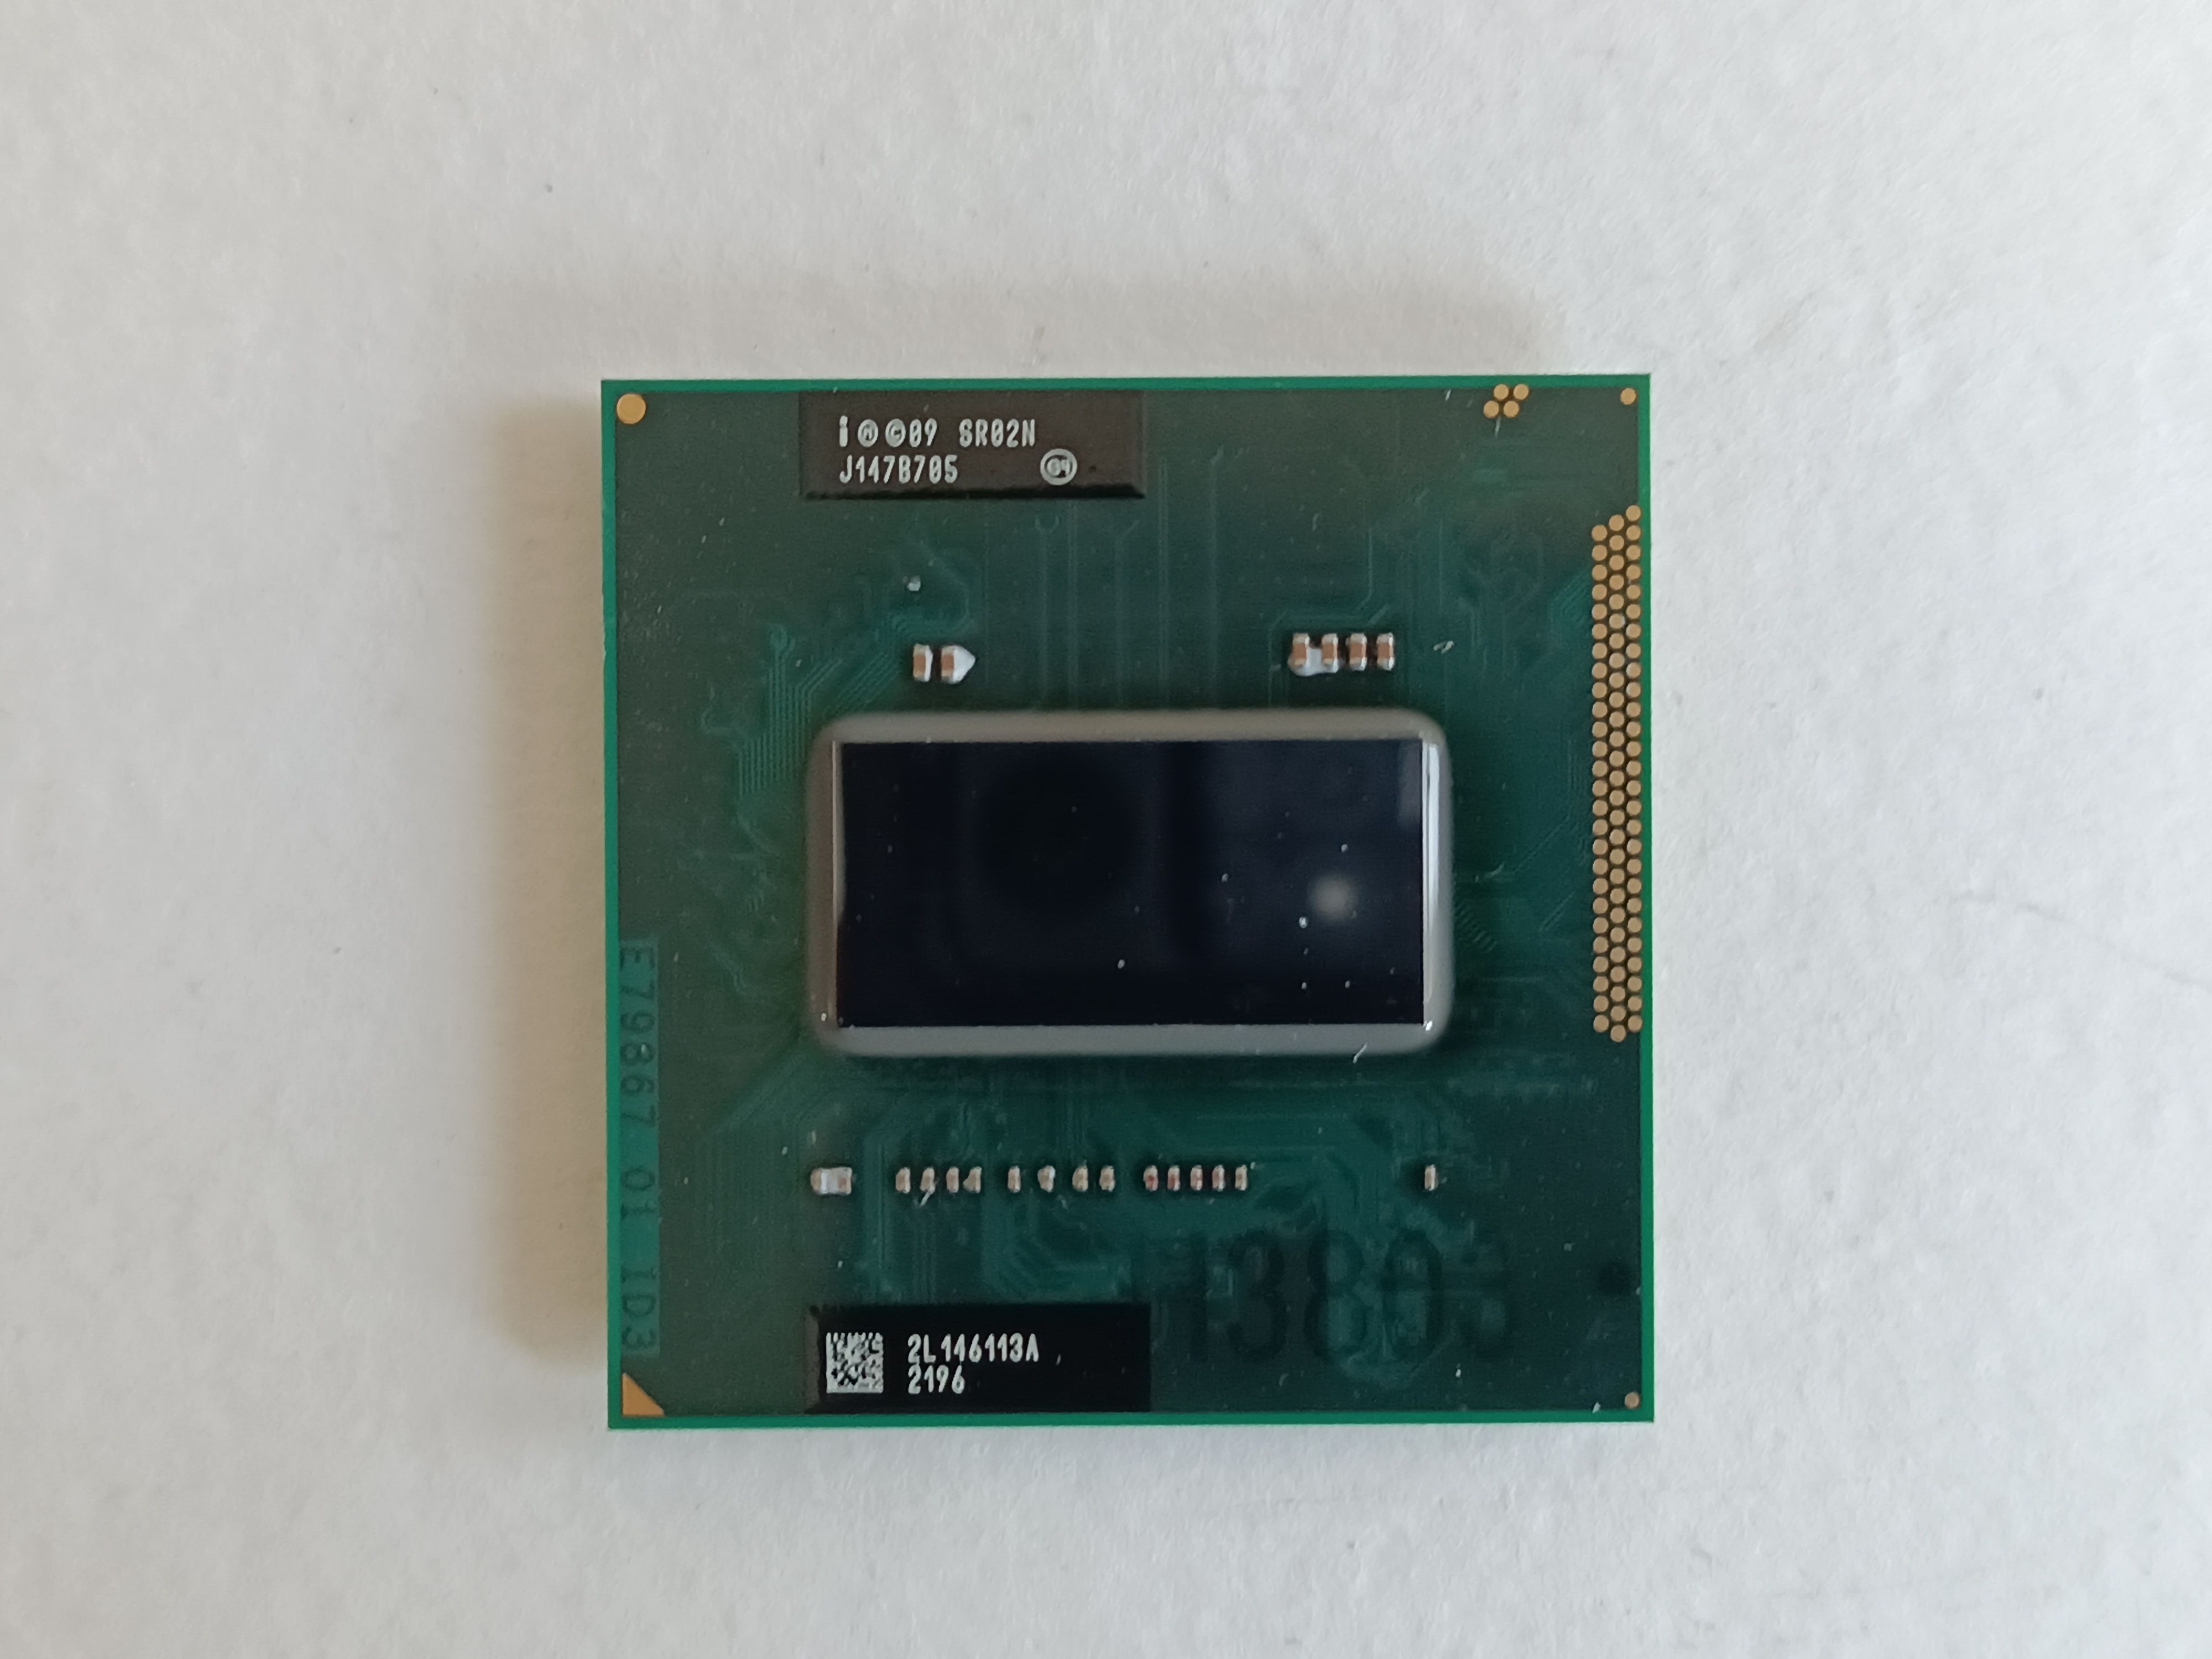 Sr02n Intel Core i7-2670qm. Pga988 процессоры. Intel core i7 2640m